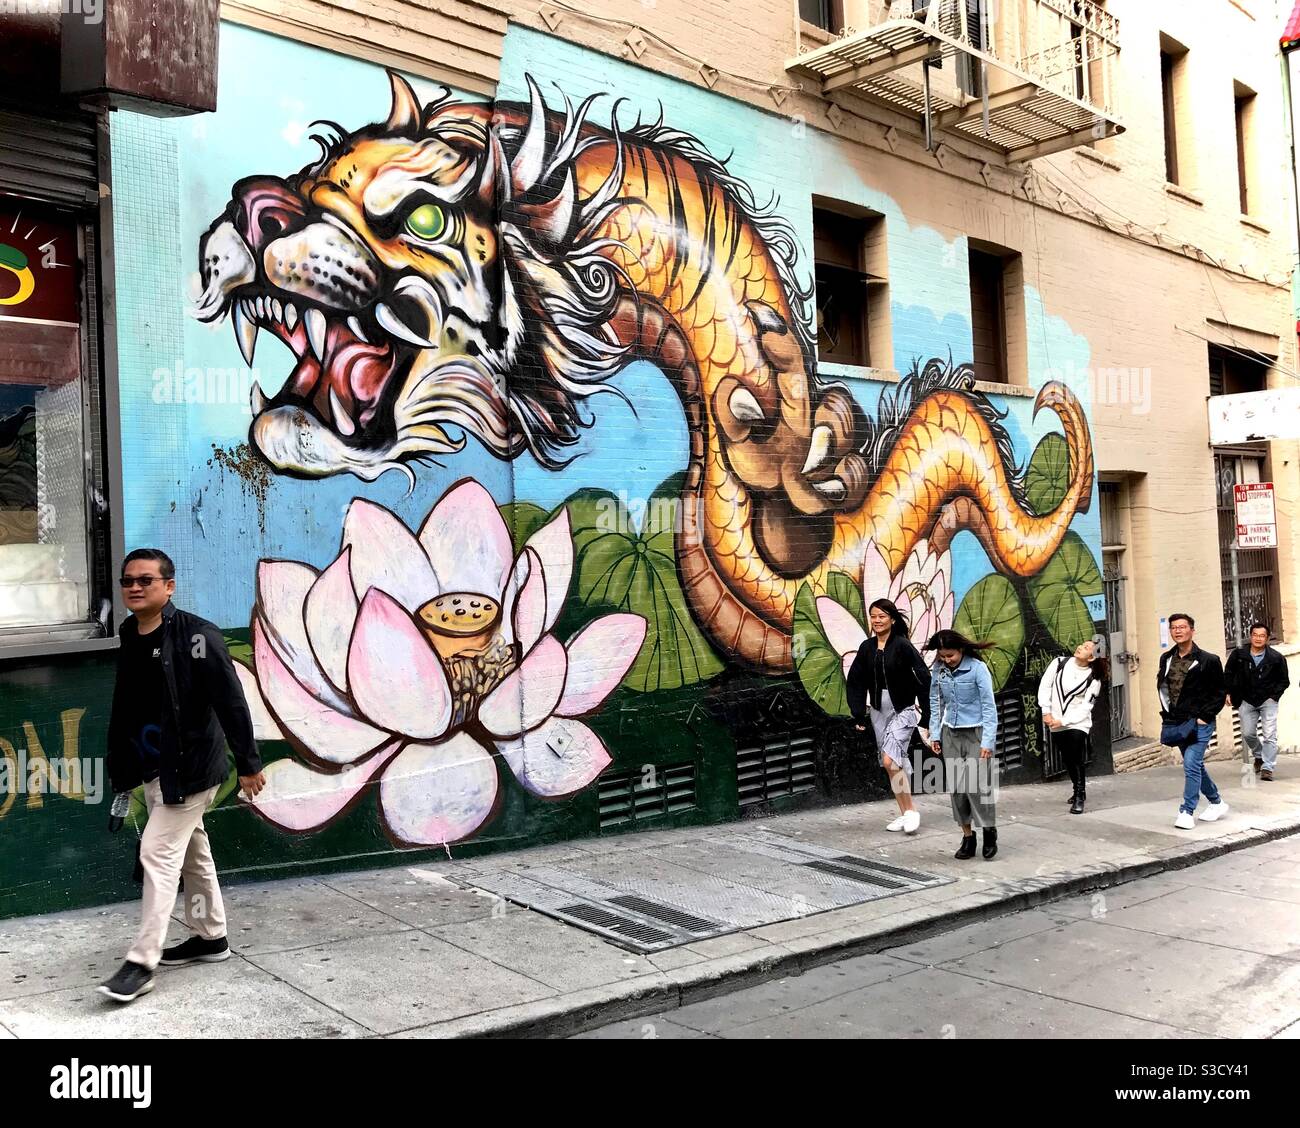 Street art - Chinese dragon in China Town, San Francisco, California, USA Stock Photo